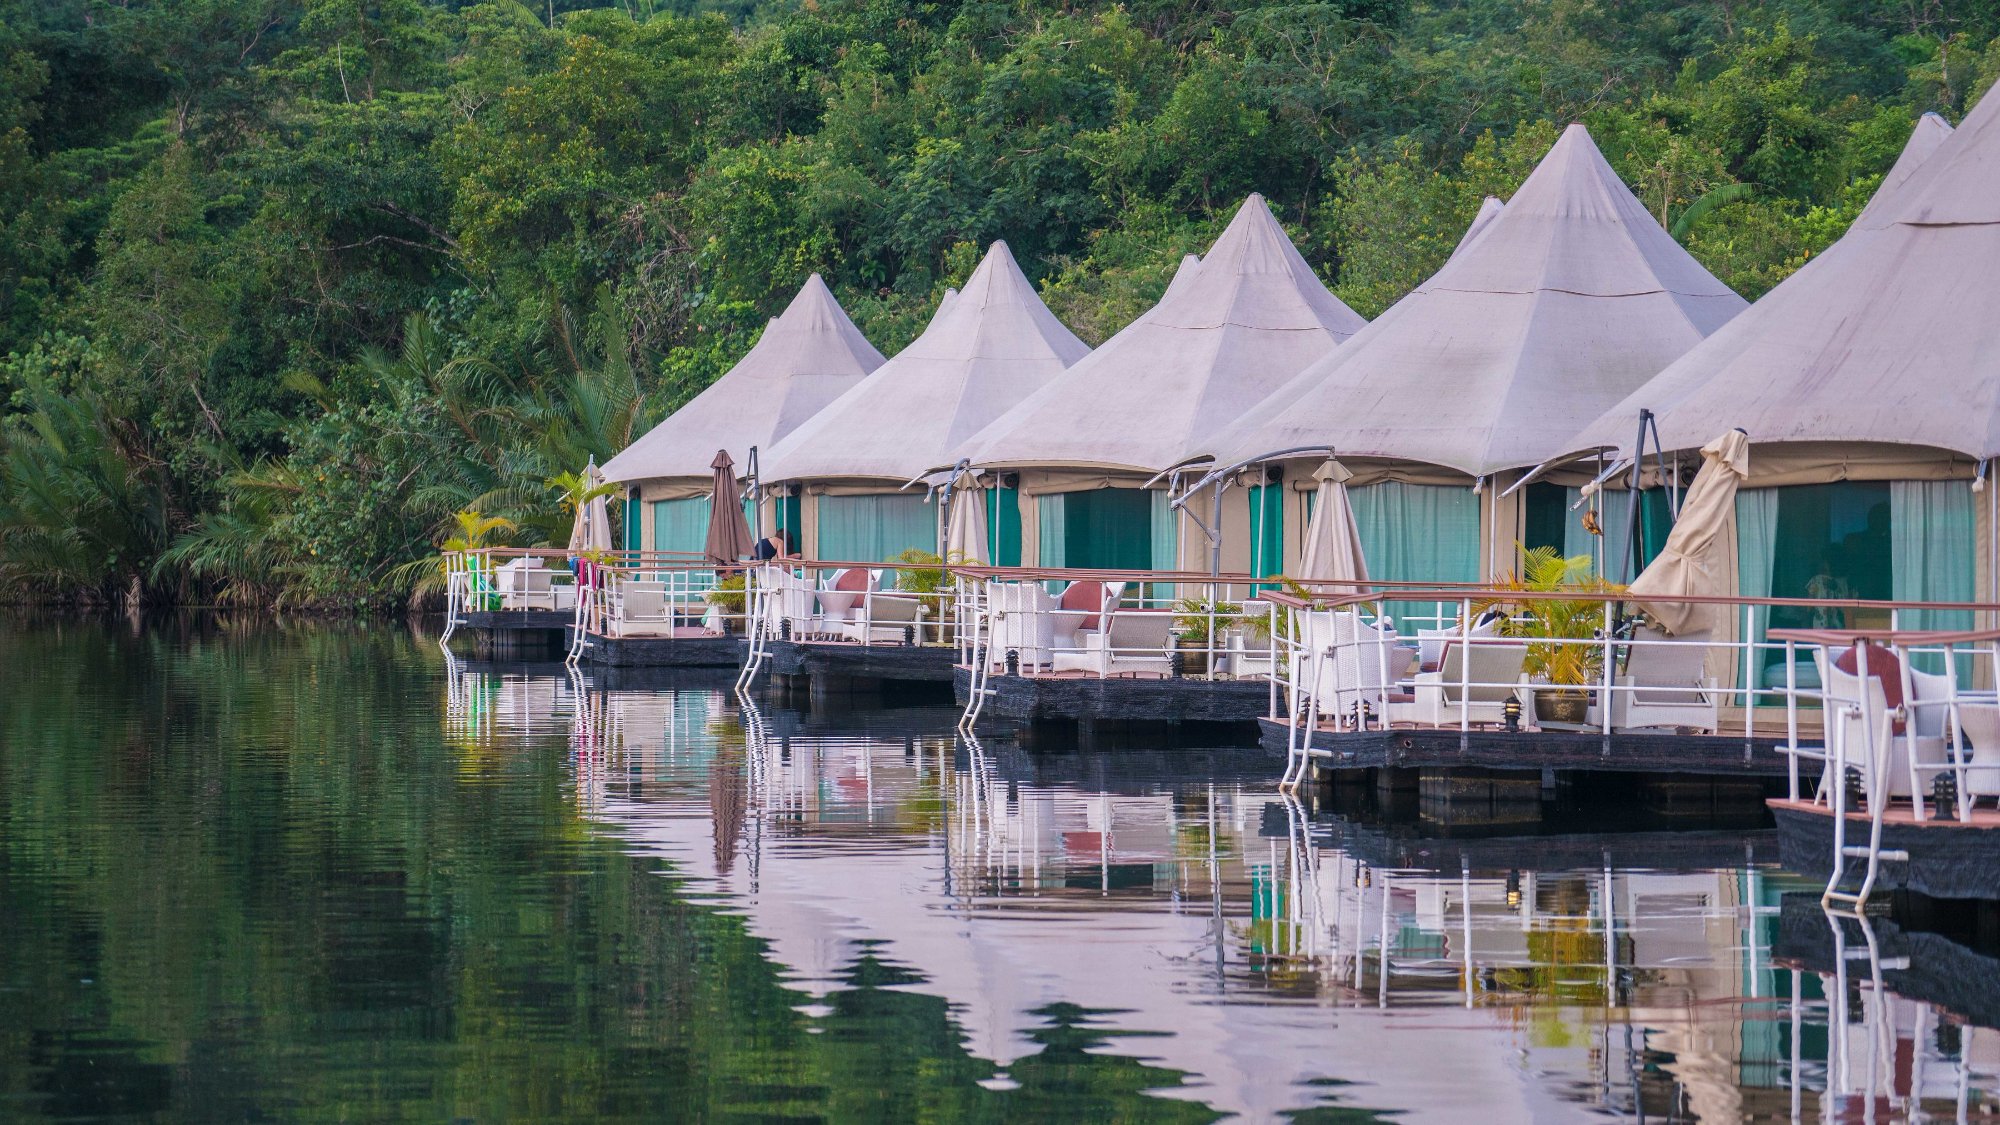 10 hoteles flotantes que son mejores que los bungalows sobre agua | Esta web - 11